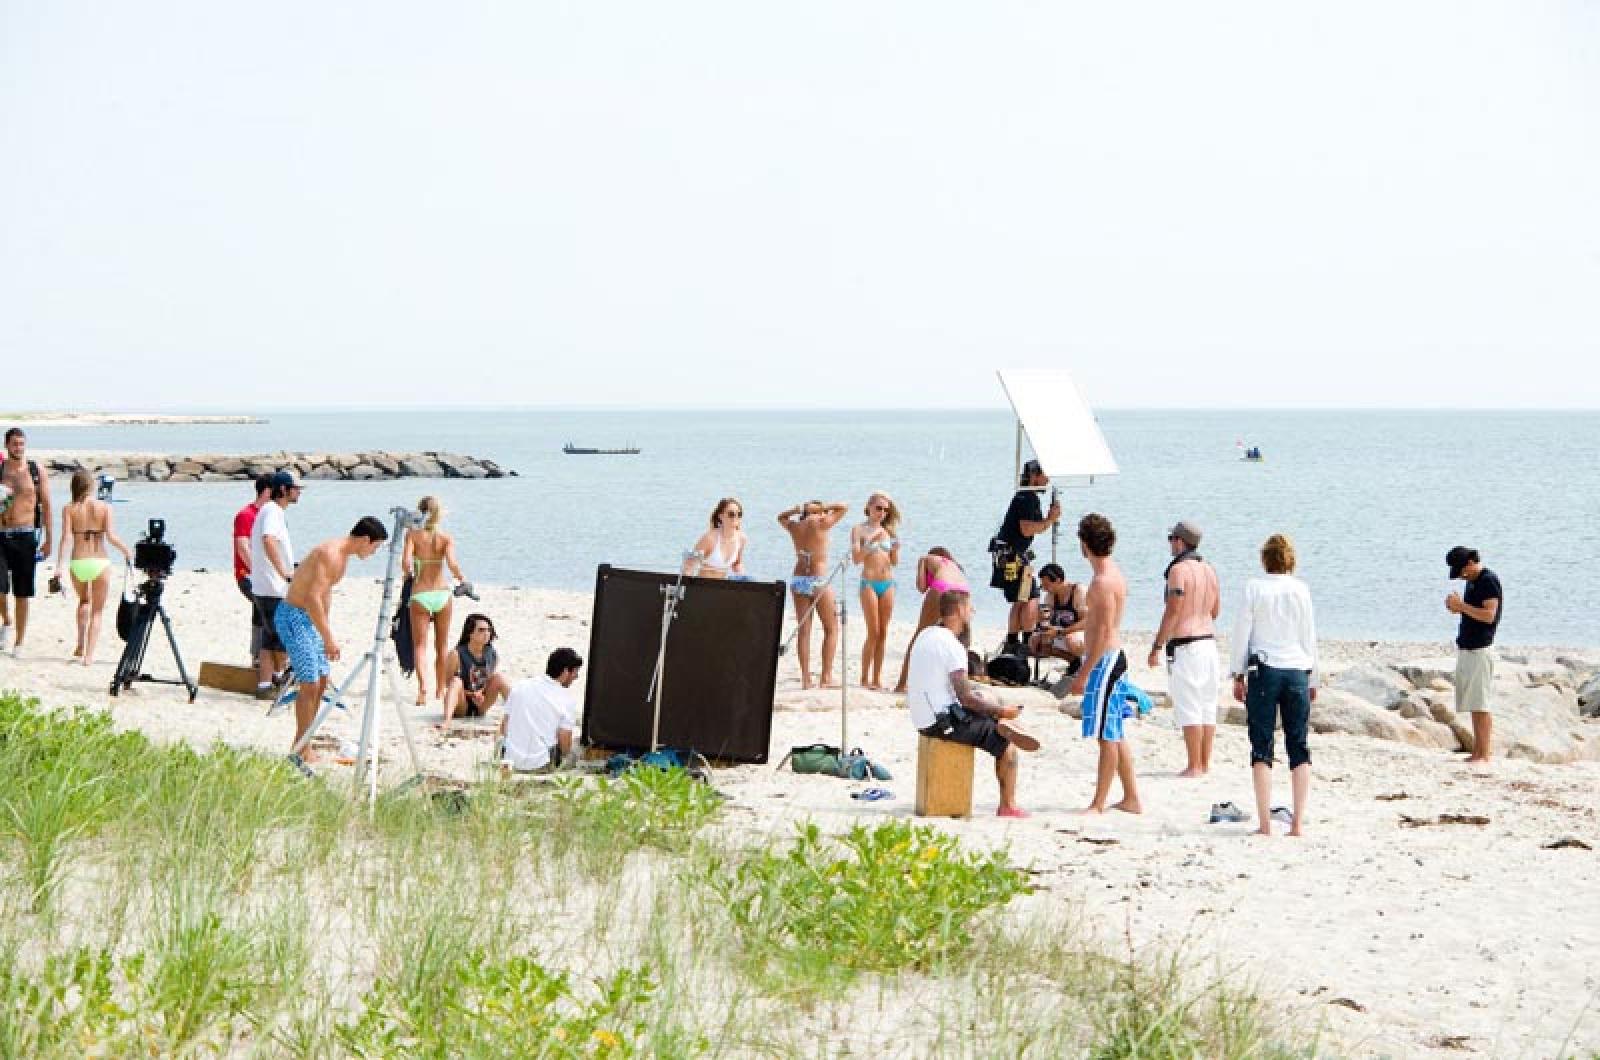 The Vineyard filmed on the beach